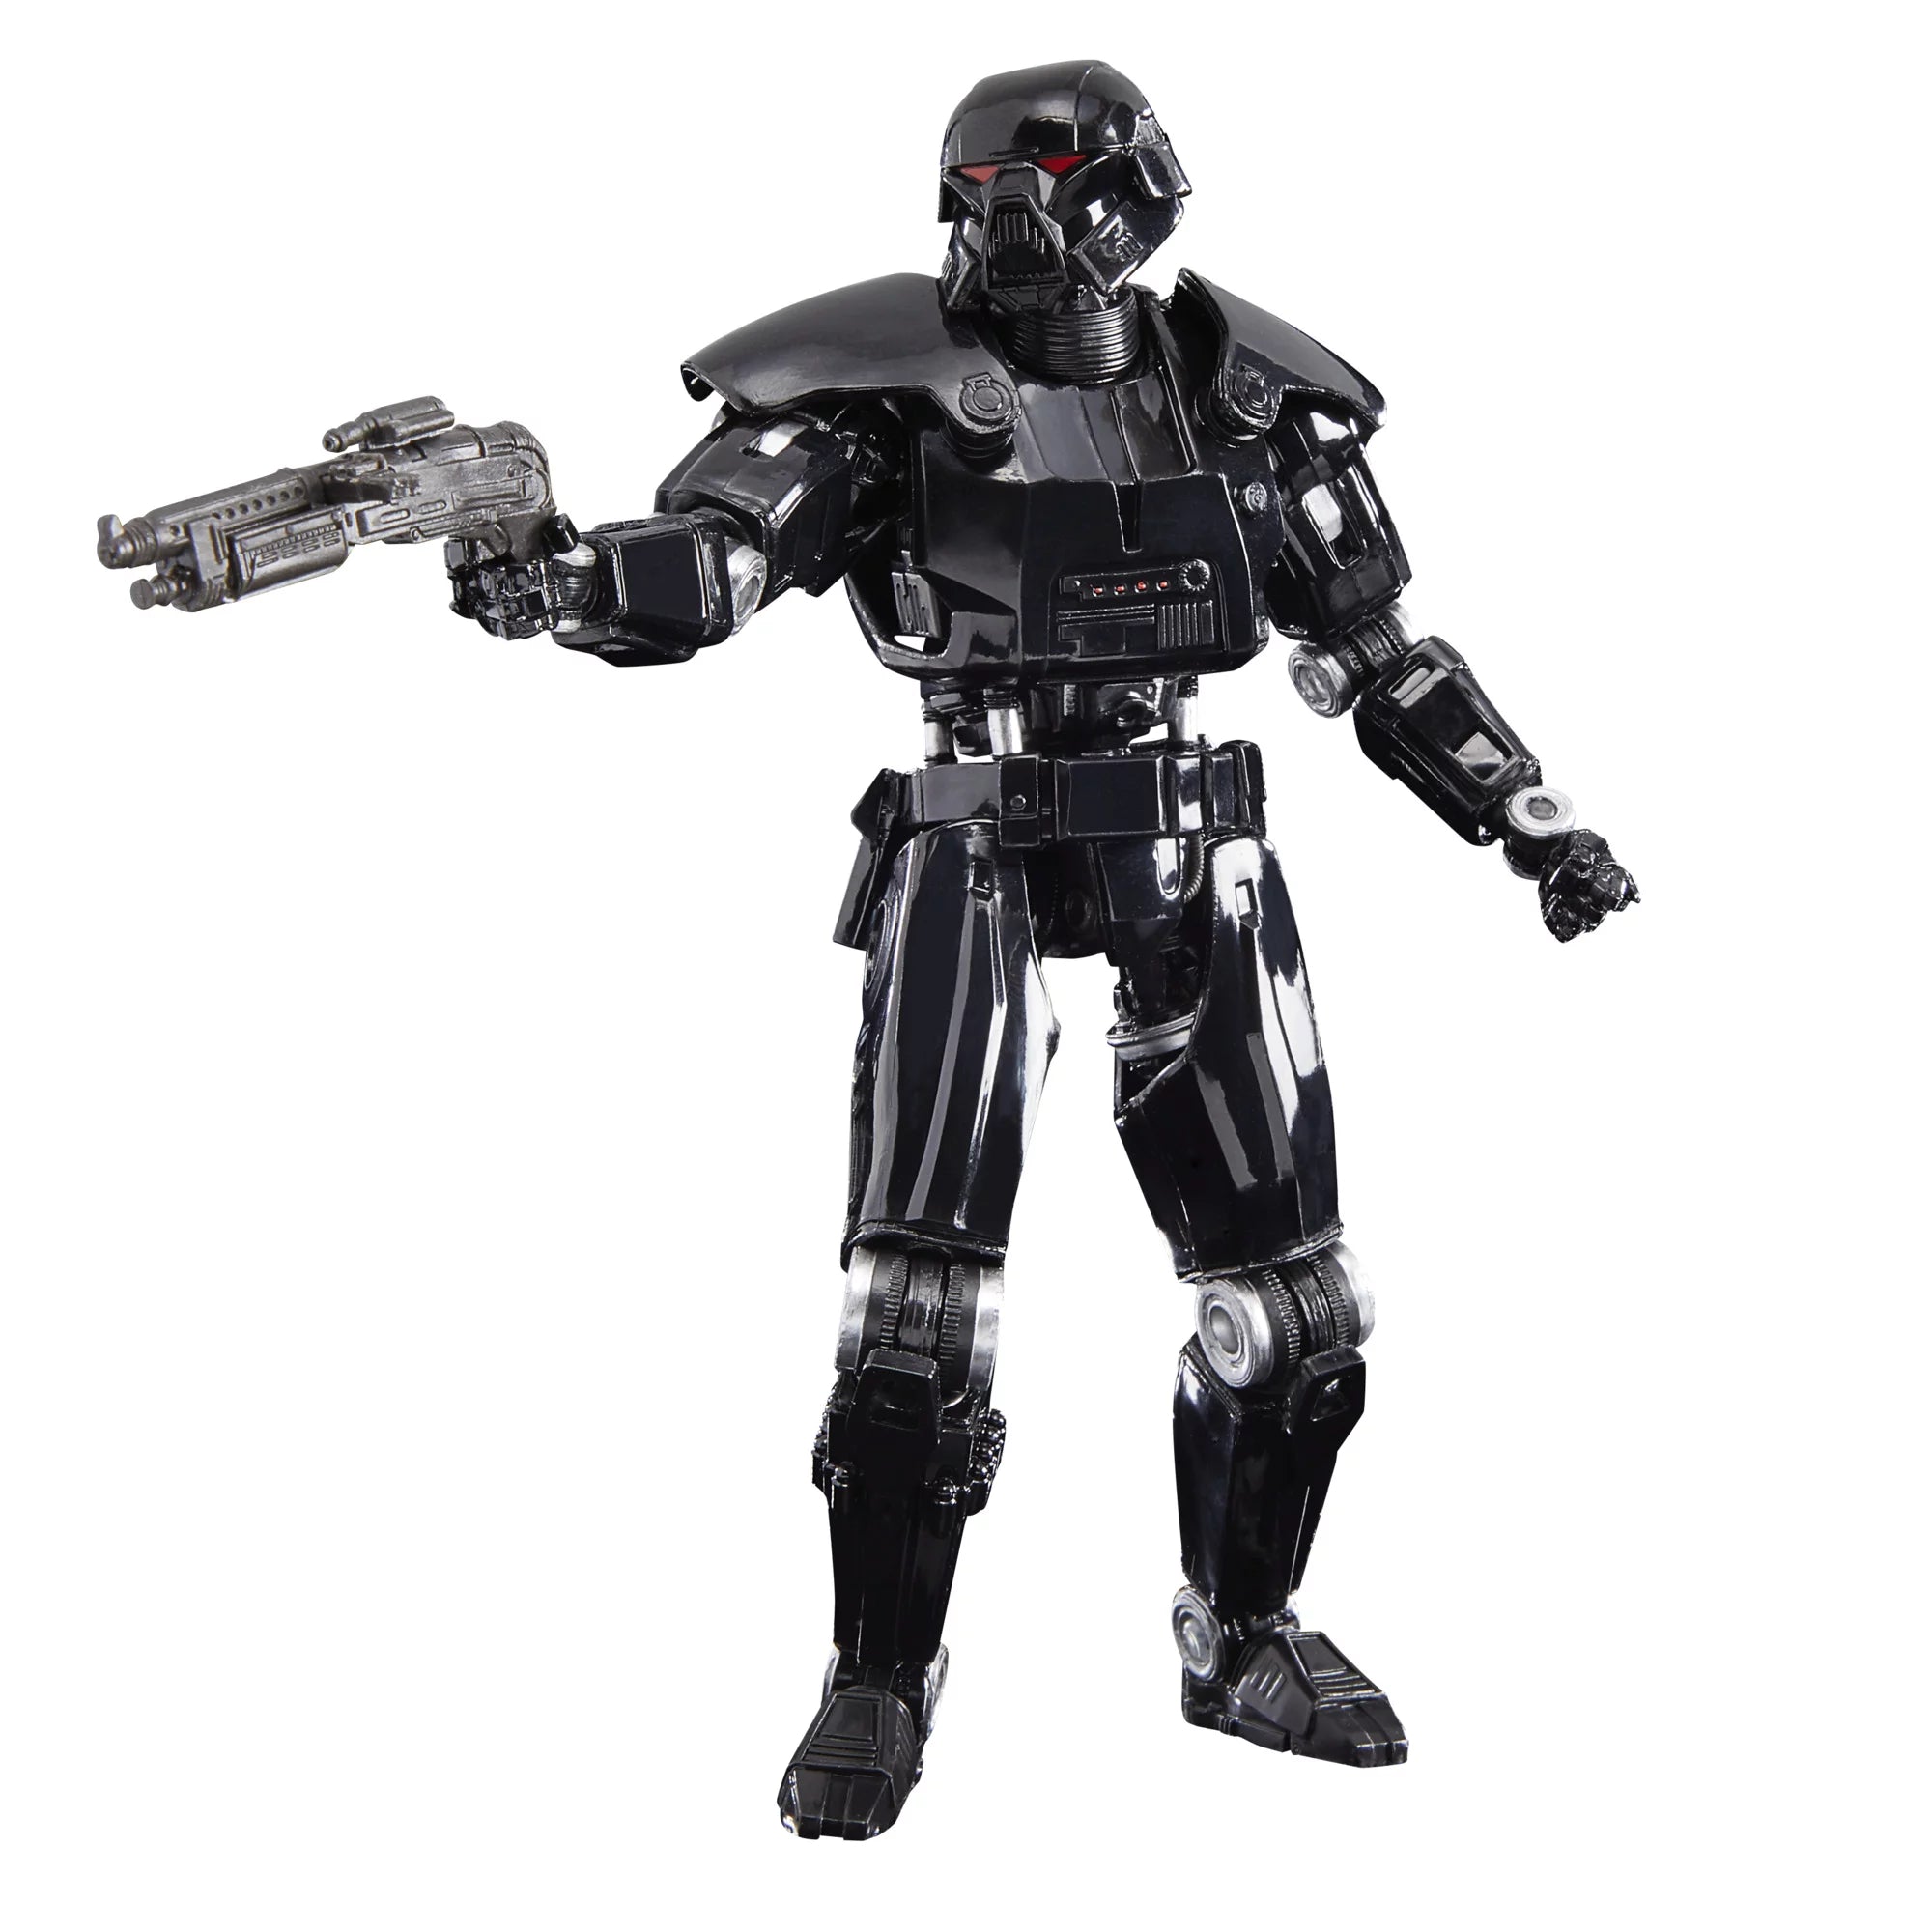 Star Wars: The Black Series 6" Deluxe Dark Trooper By Hashbro